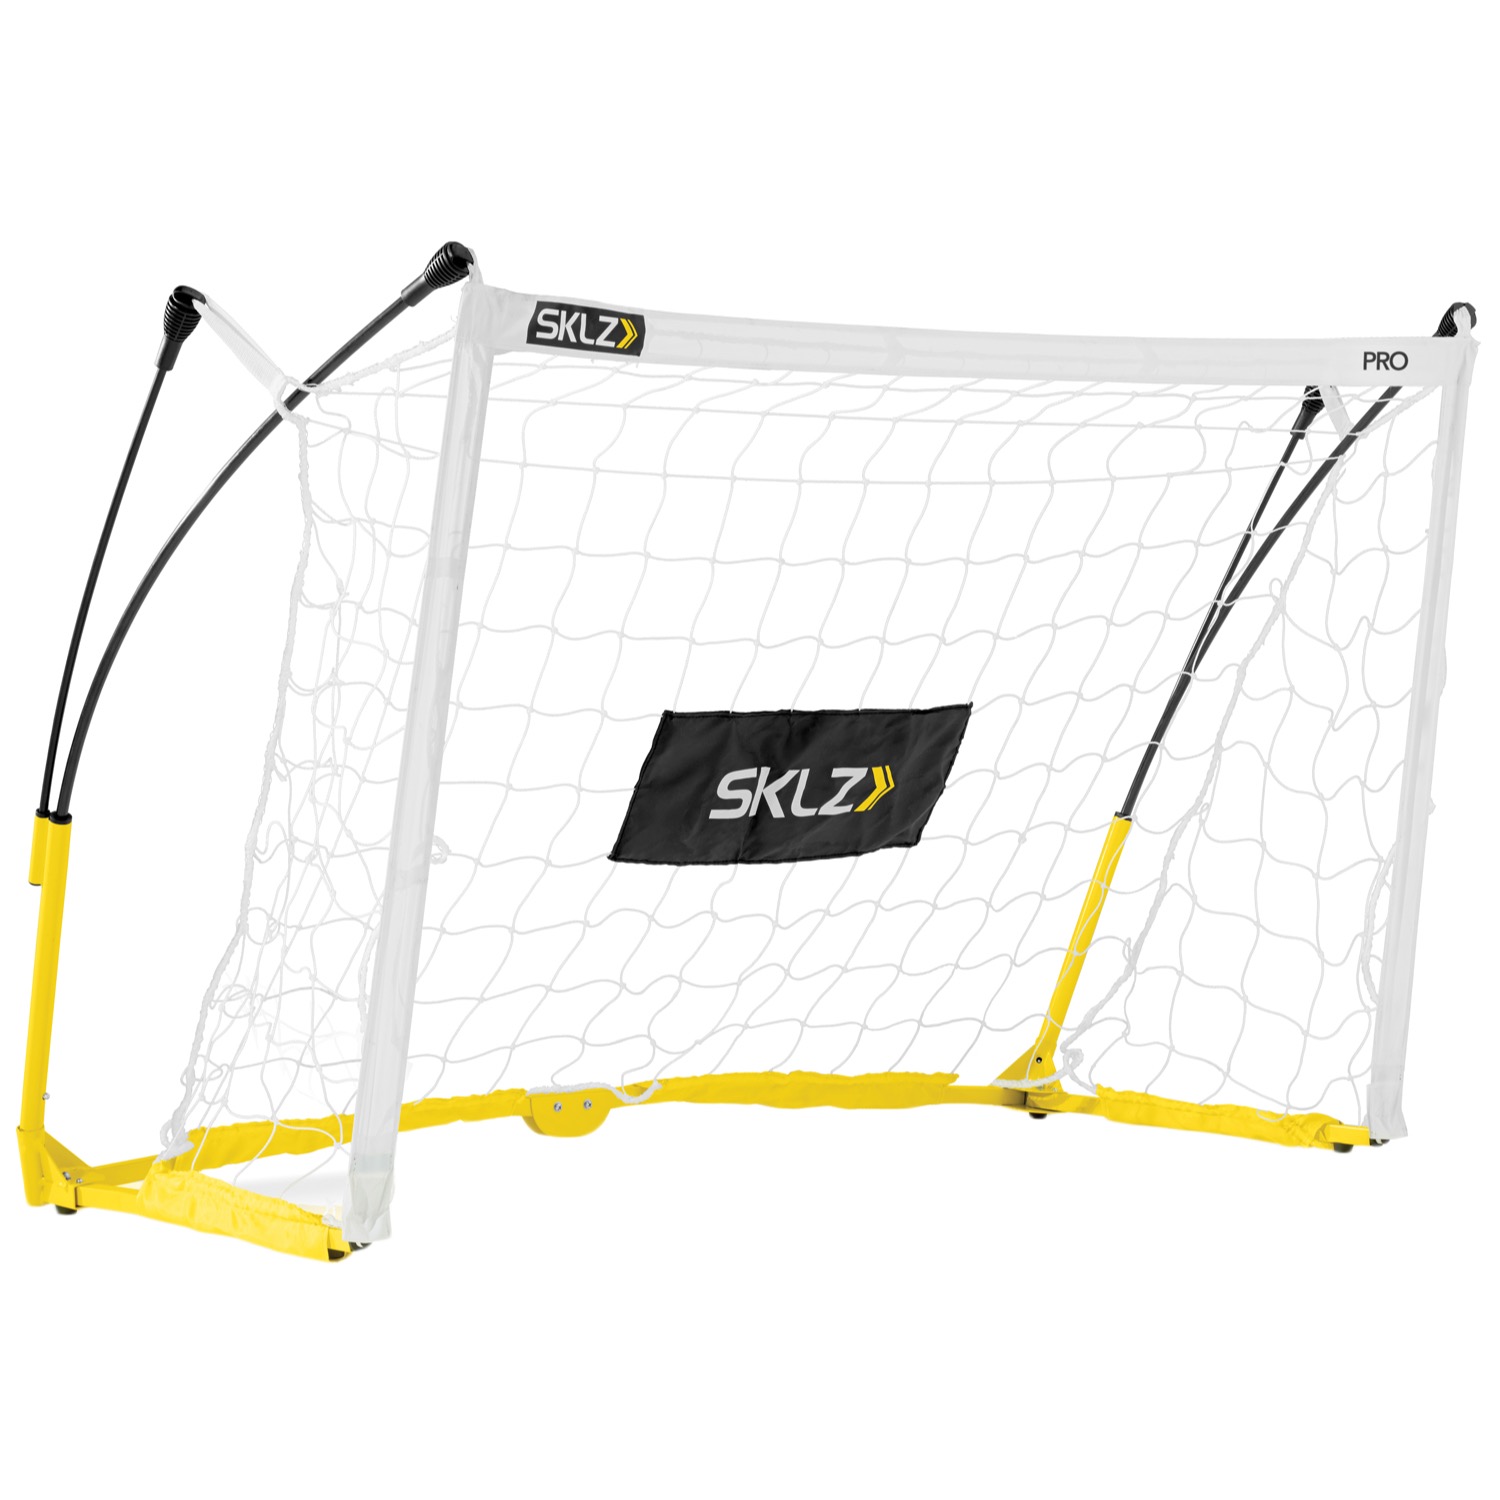 Portable Soccer Goal. SKLZ Pro Training Goal 6x4, 8x5, 12x6, 186x66 